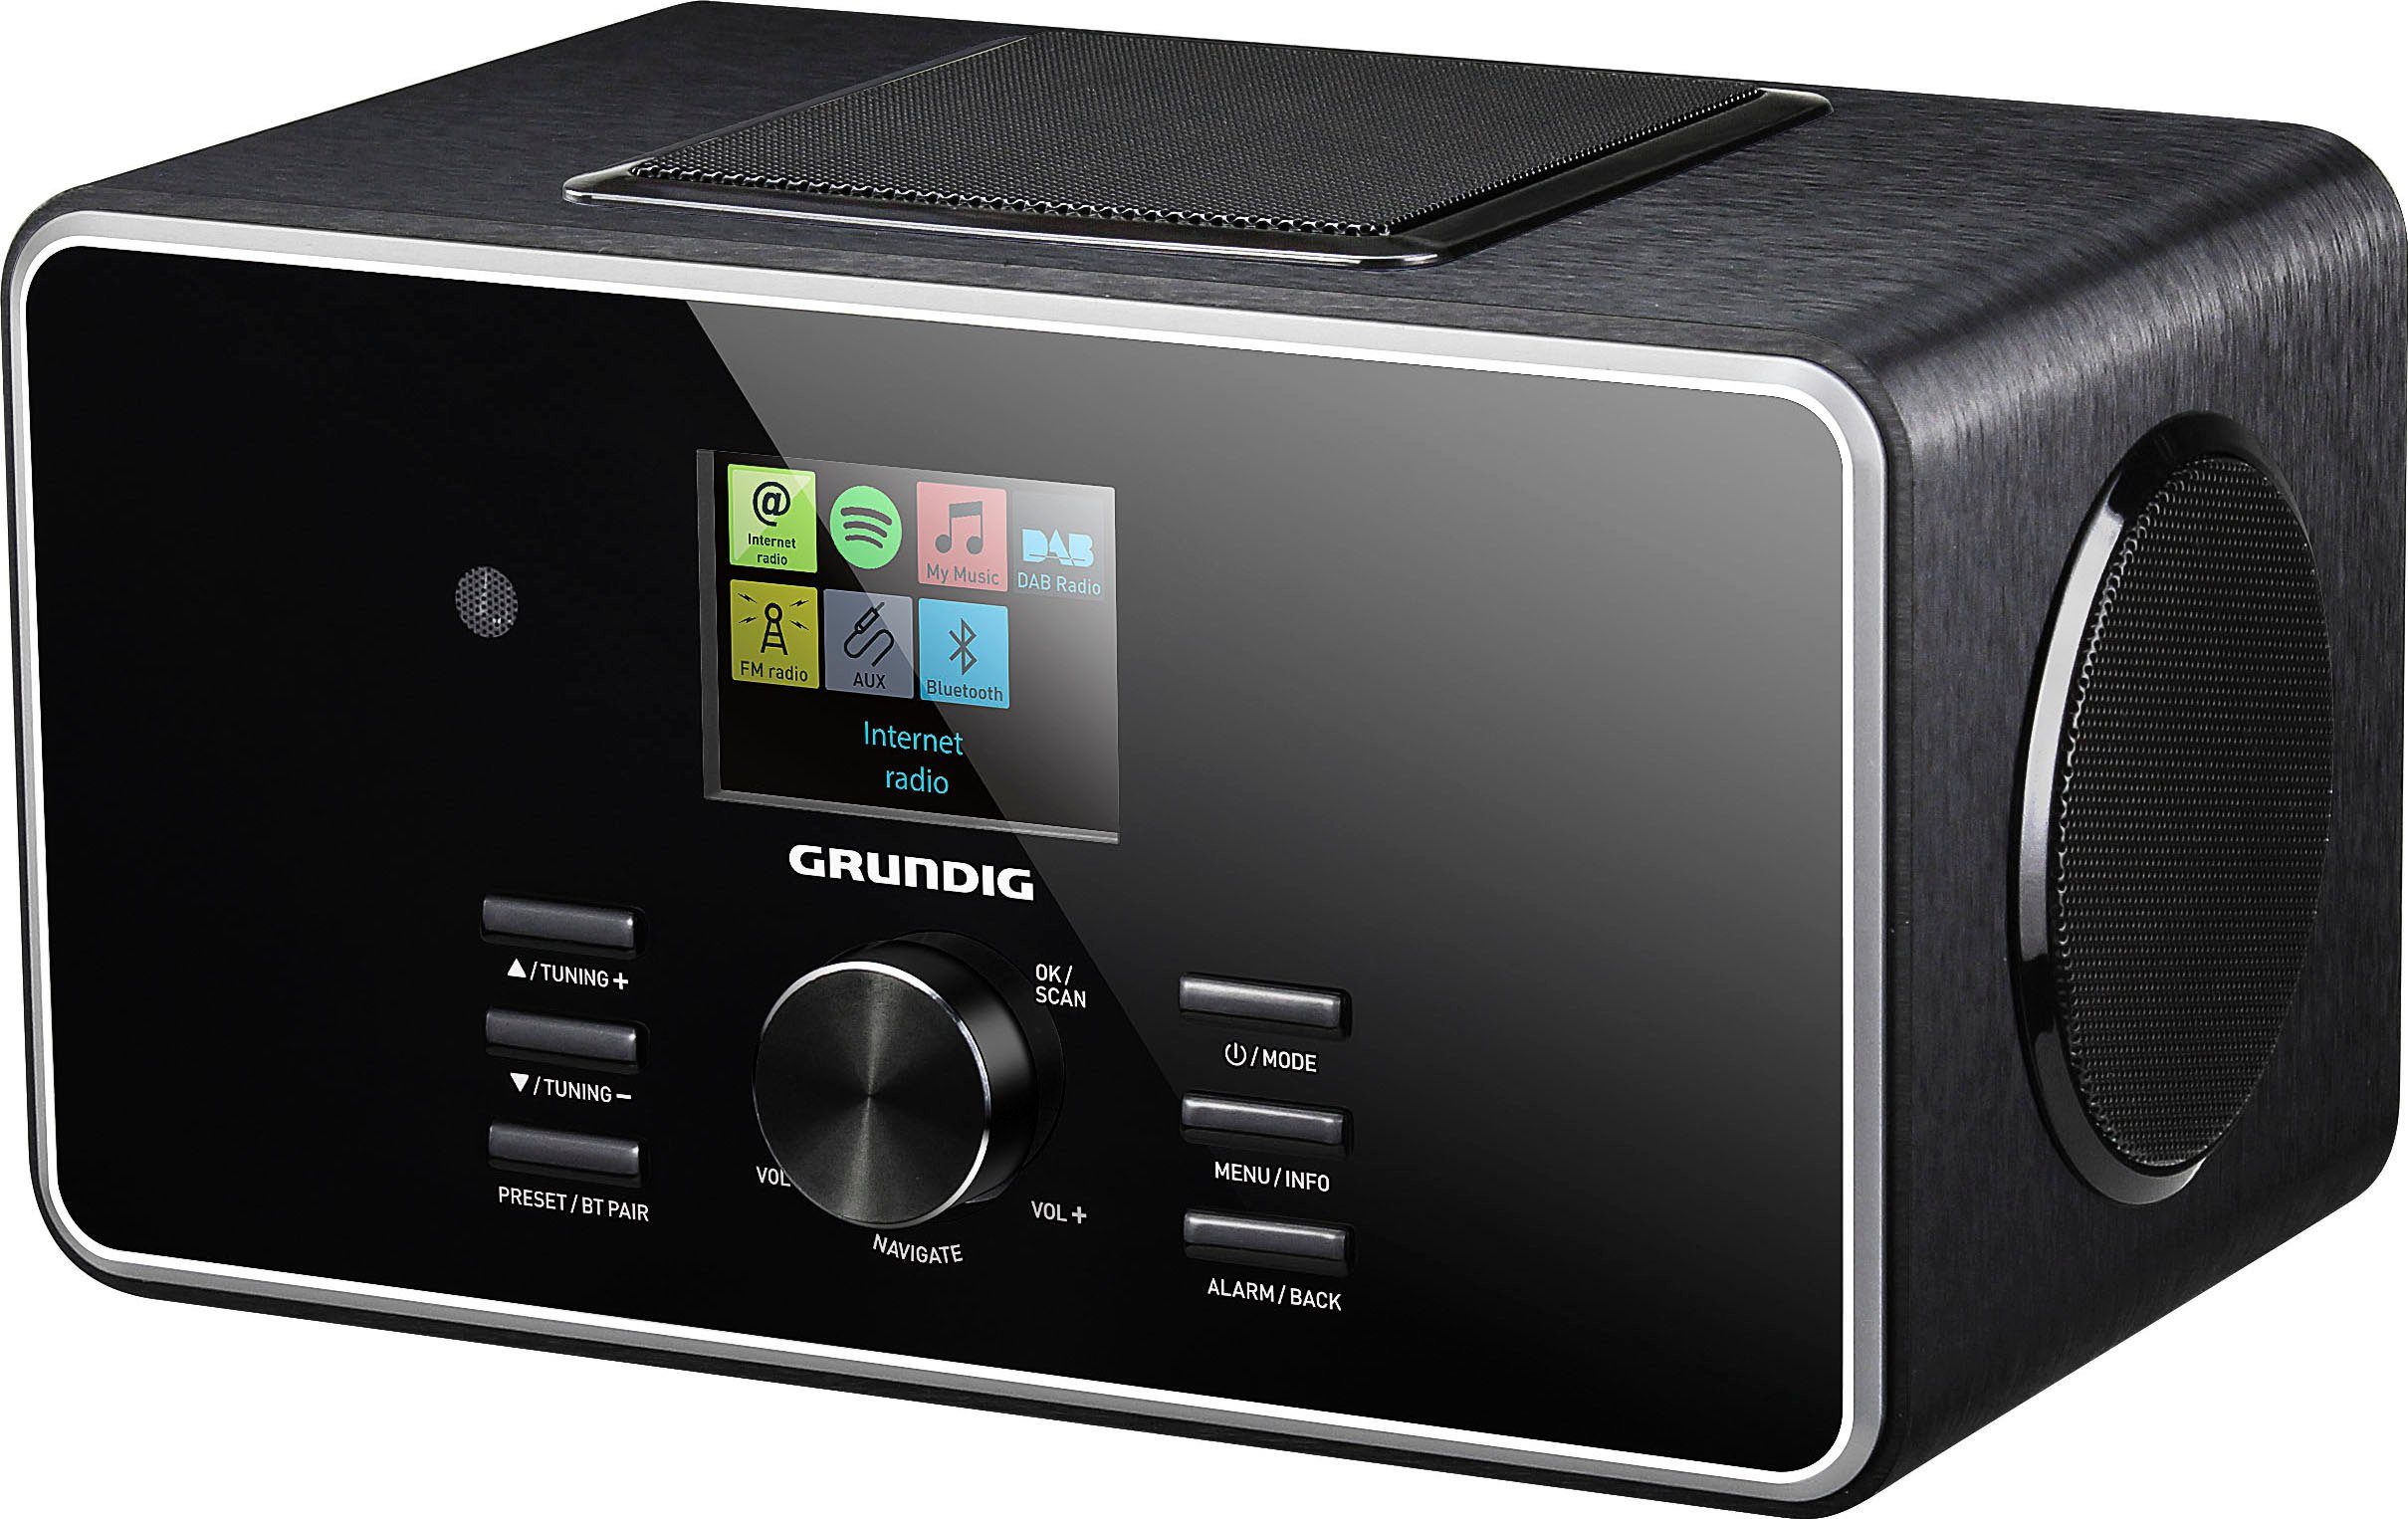 Grundig DTR 6000 28 FM-Tuner X (DAB), schwarz W) Digitalradio mit (Digitalradio Internetradio, RDS, (DAB)